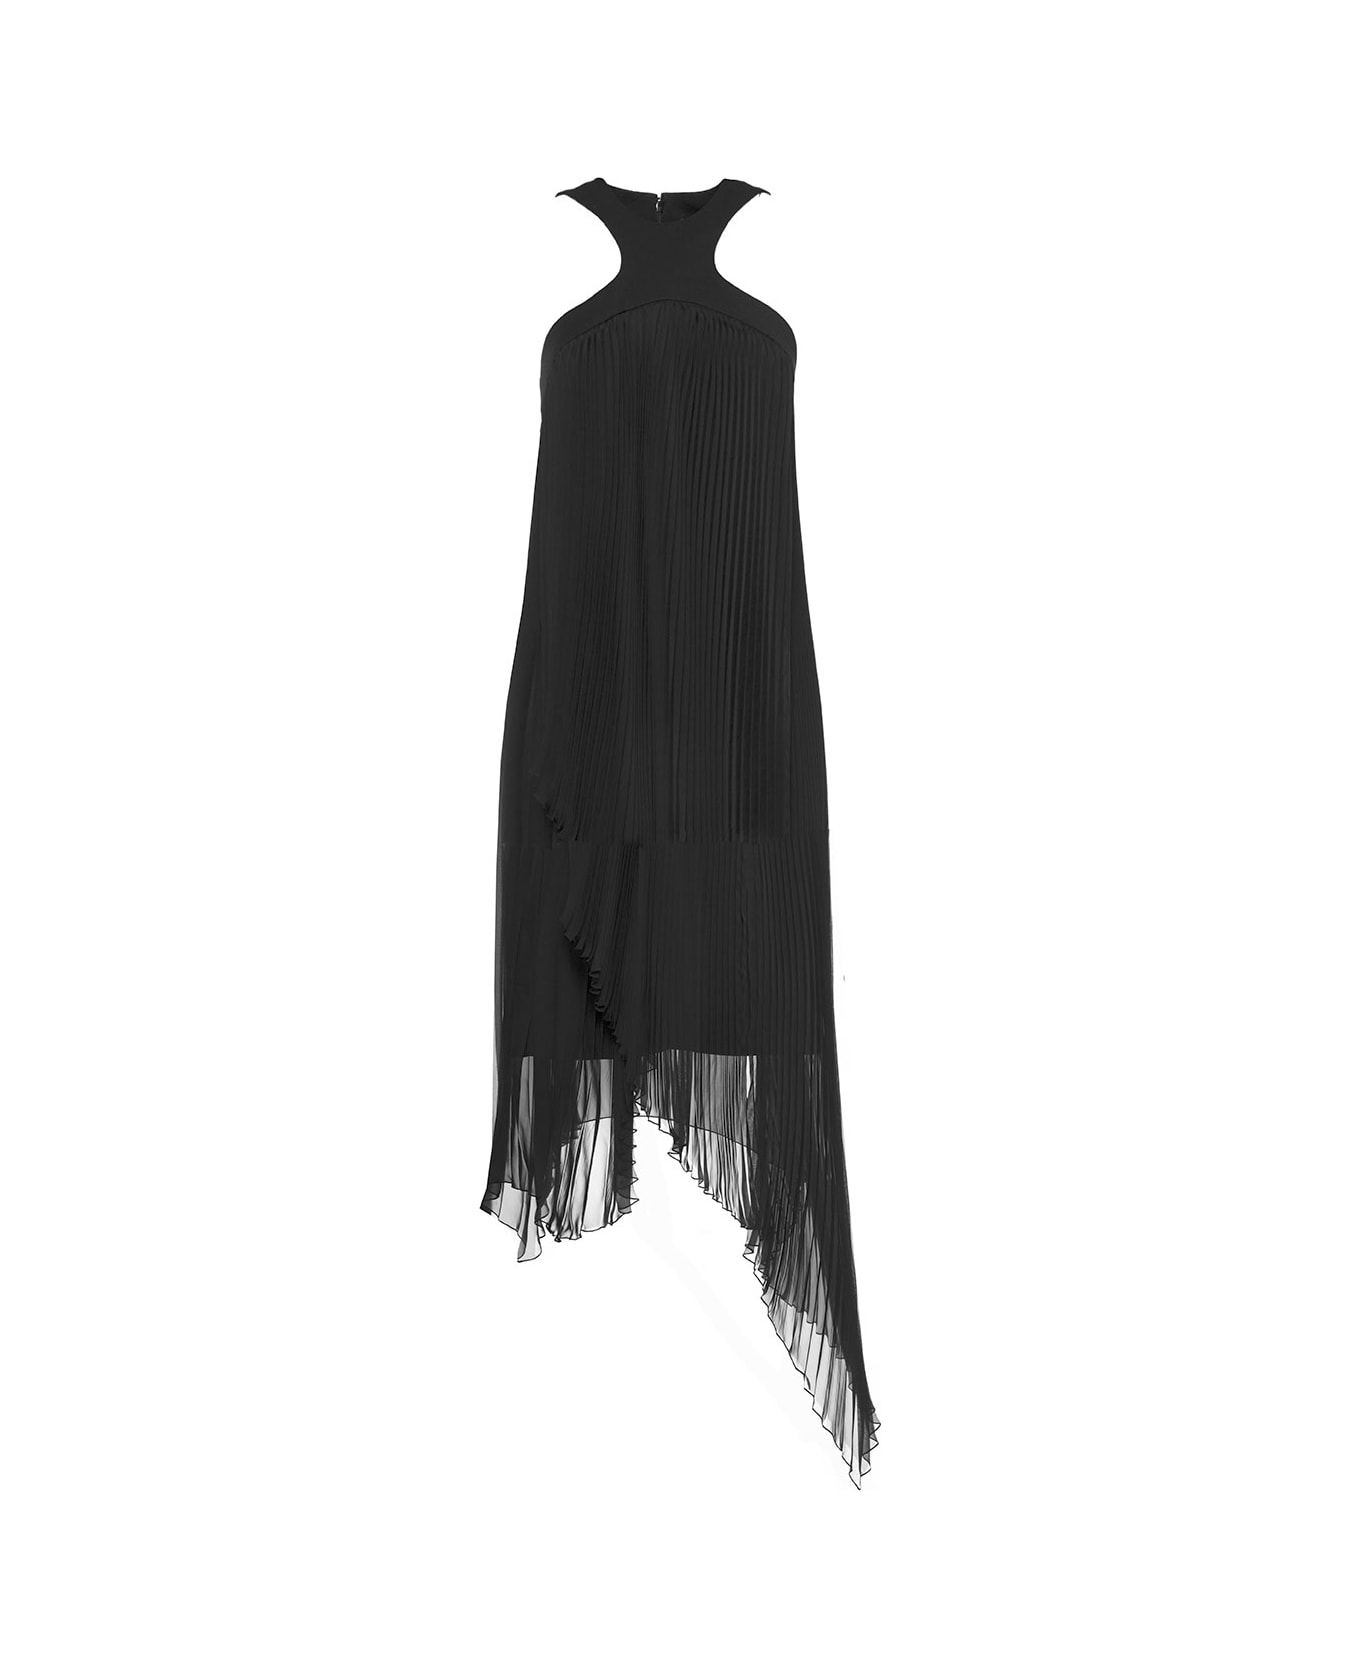 Givenchy Black Pleated Dress With Asymmetrical Bottom - Black